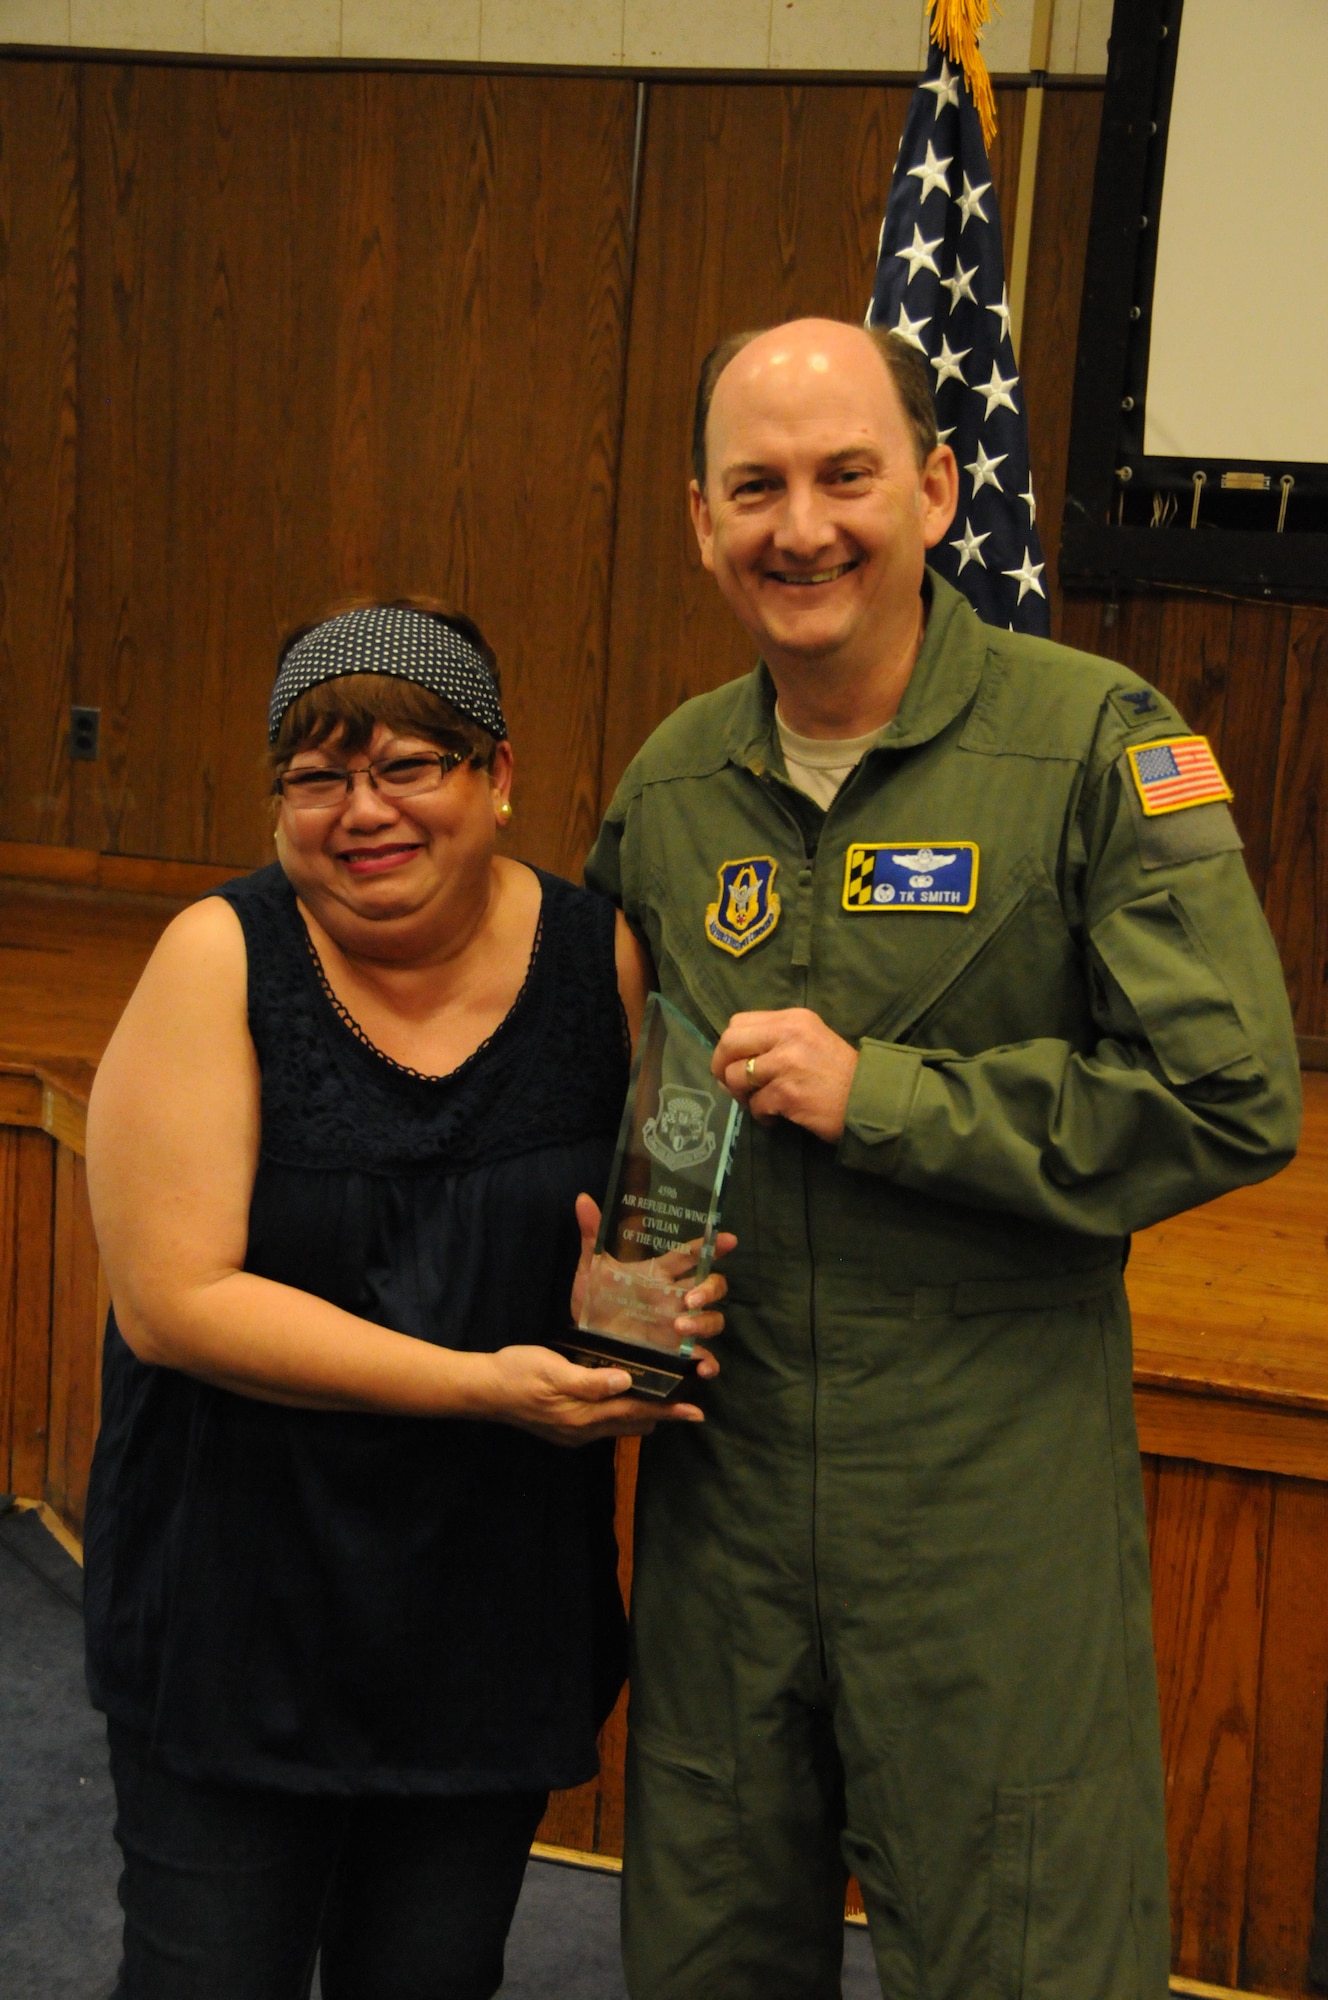 Ms. Gloria Almodiel wins 459 ARW Civilian of the Quarter for Jan - Mar 2015.